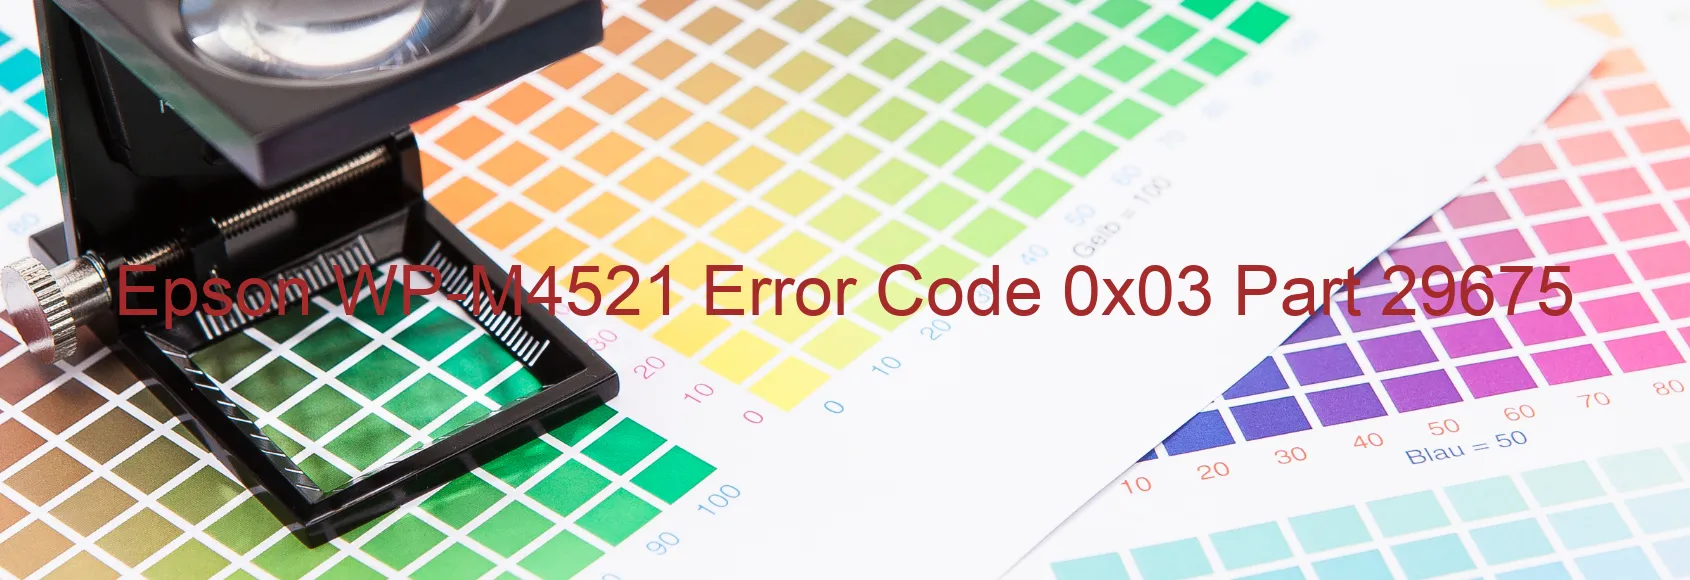 Epson WP-M4521 Error Code 0x03 Part 29675